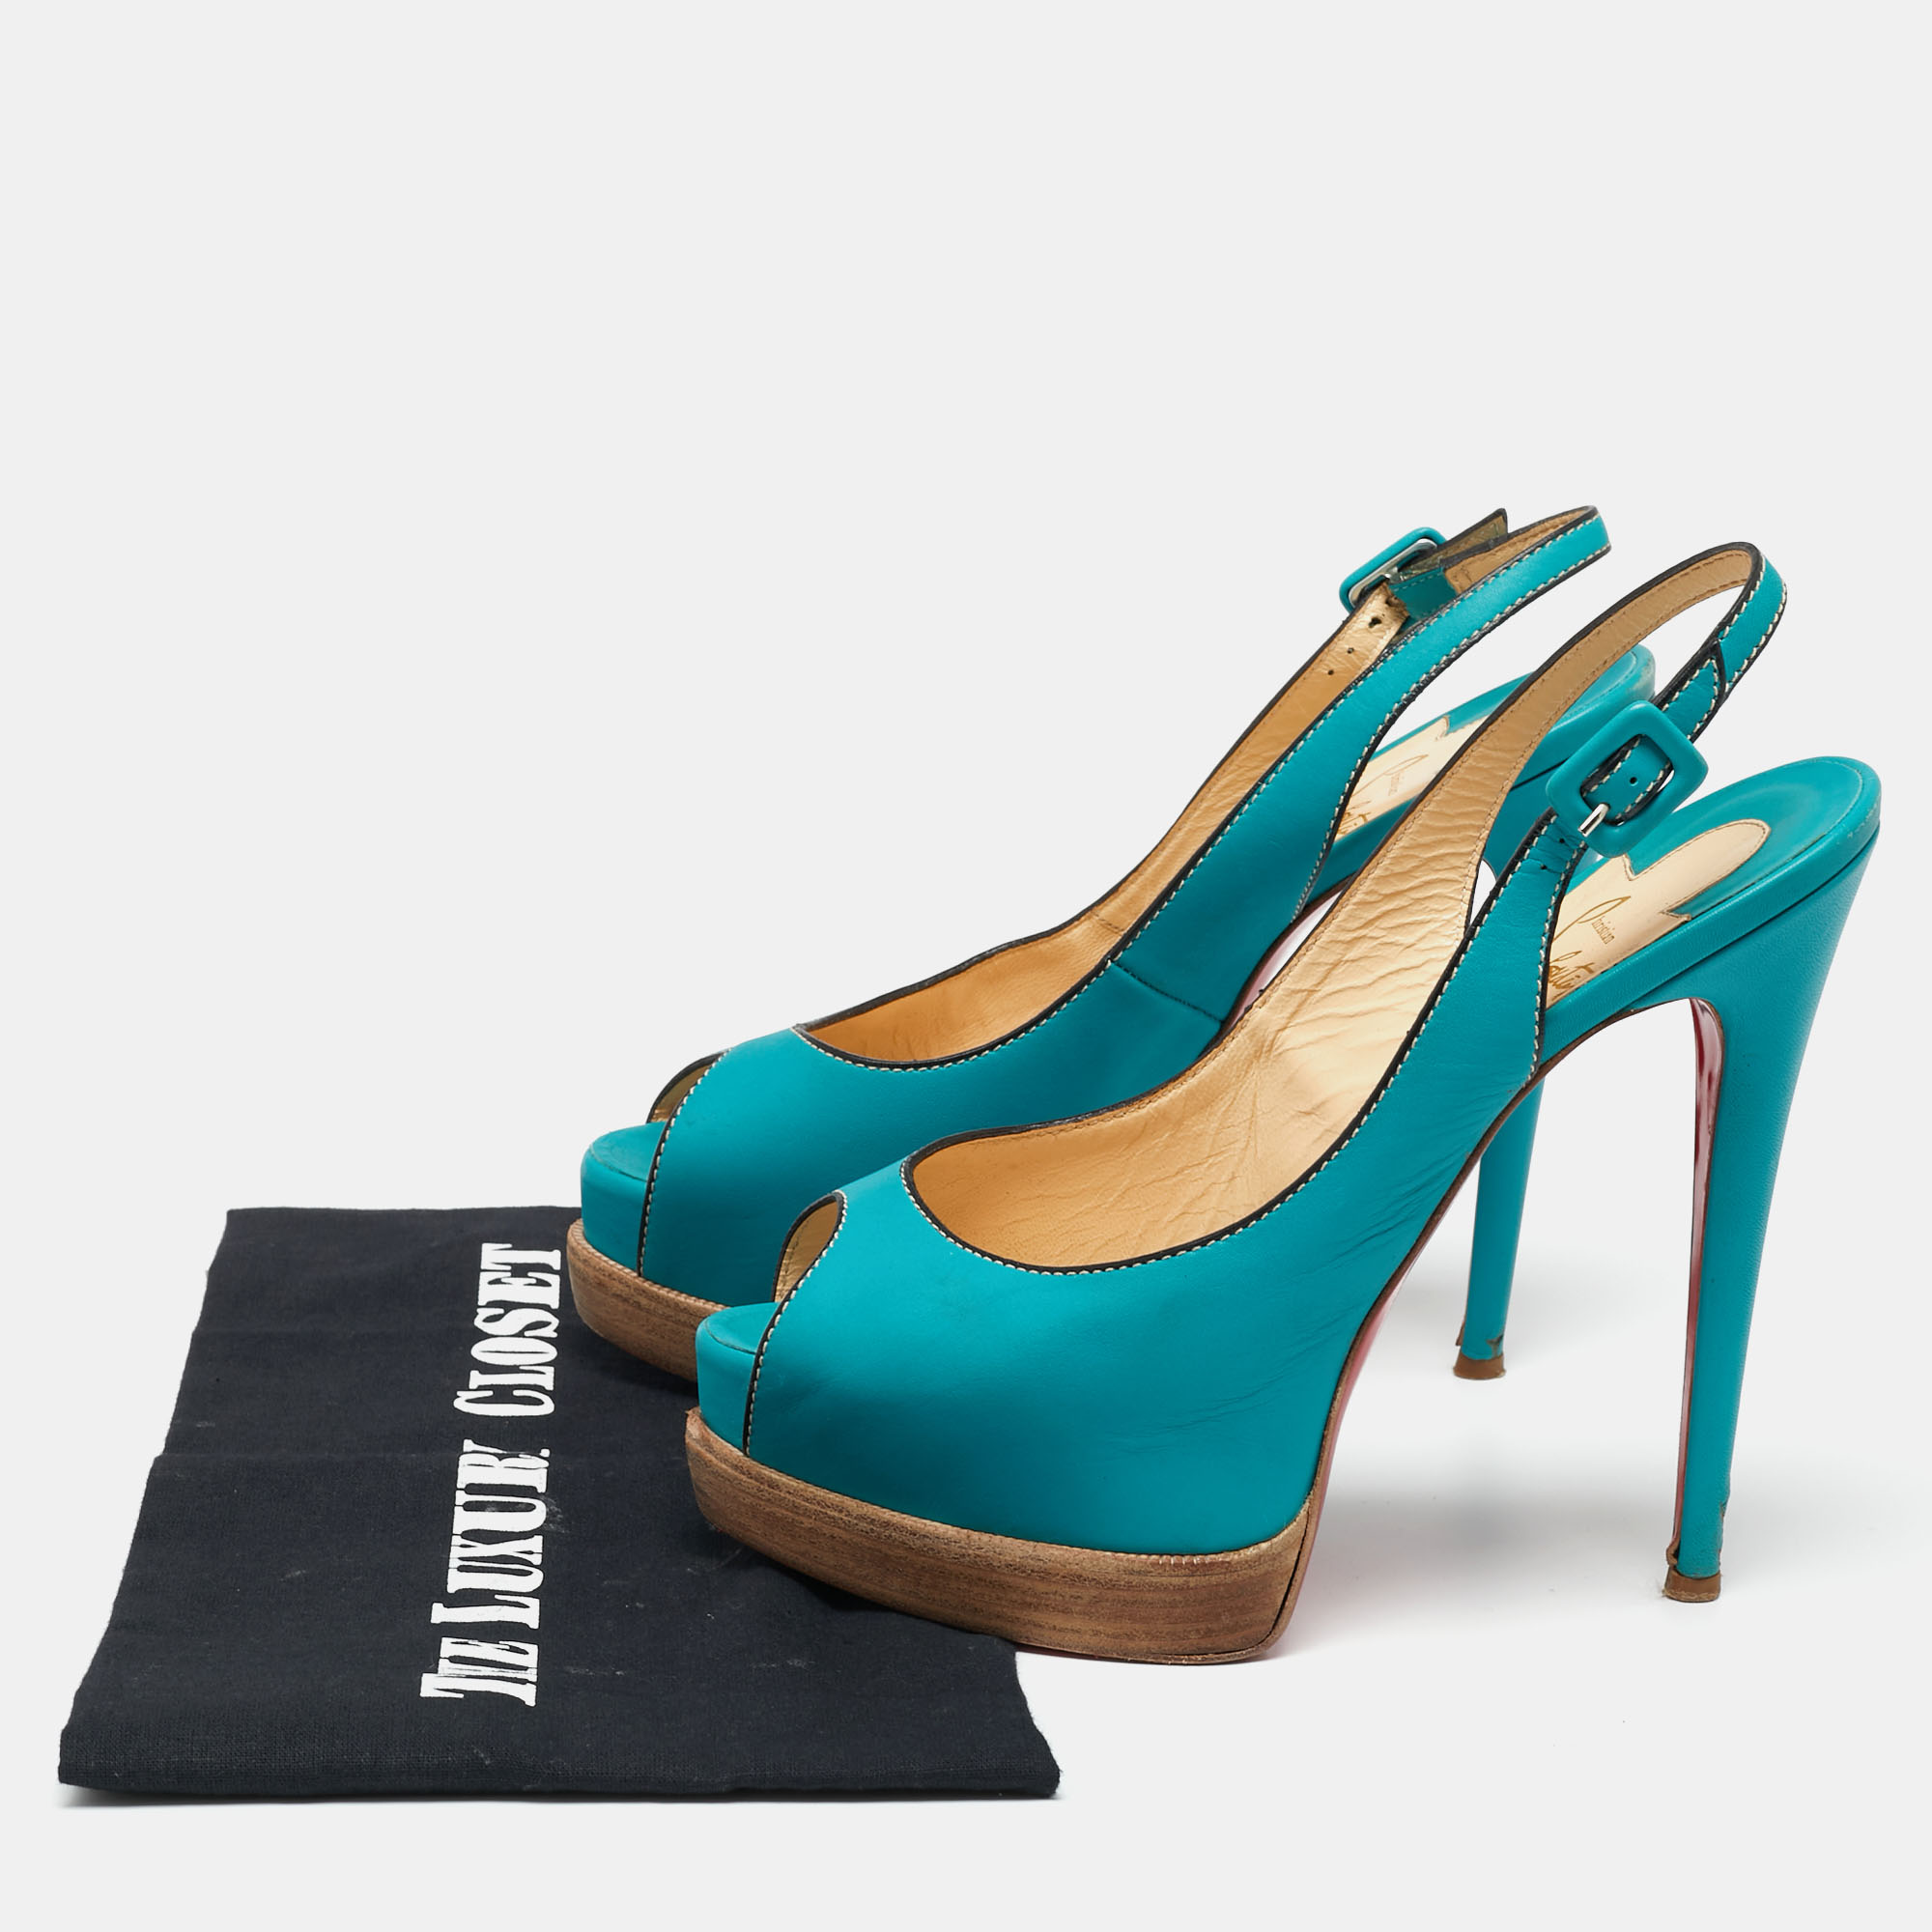 Christian Louboutin Turquoise Leather Peep-Toe Platform Slingback Sandals Size 38.5